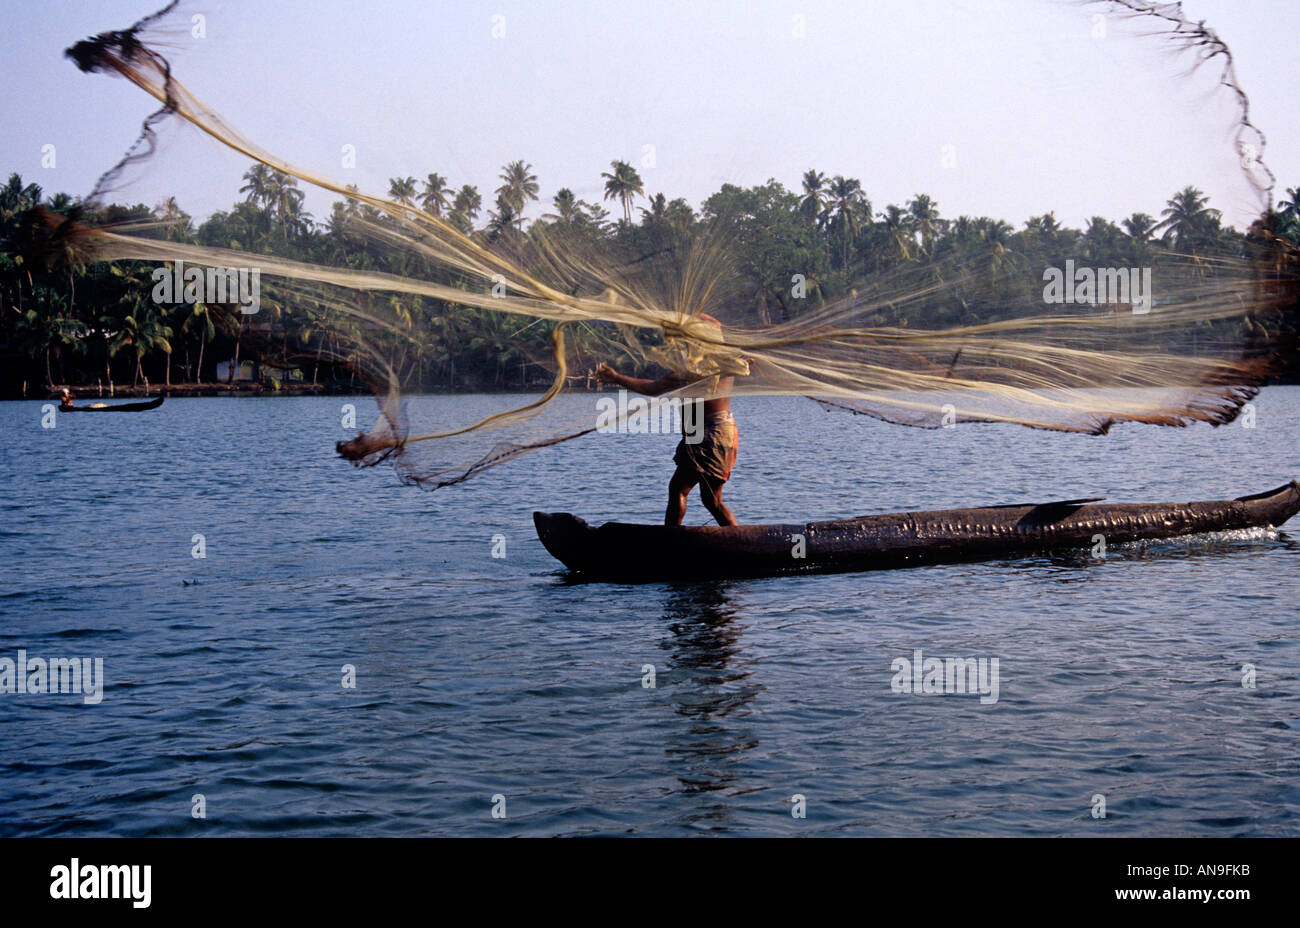 THROWNET FISHING KERALA Stock Photo - Alamy